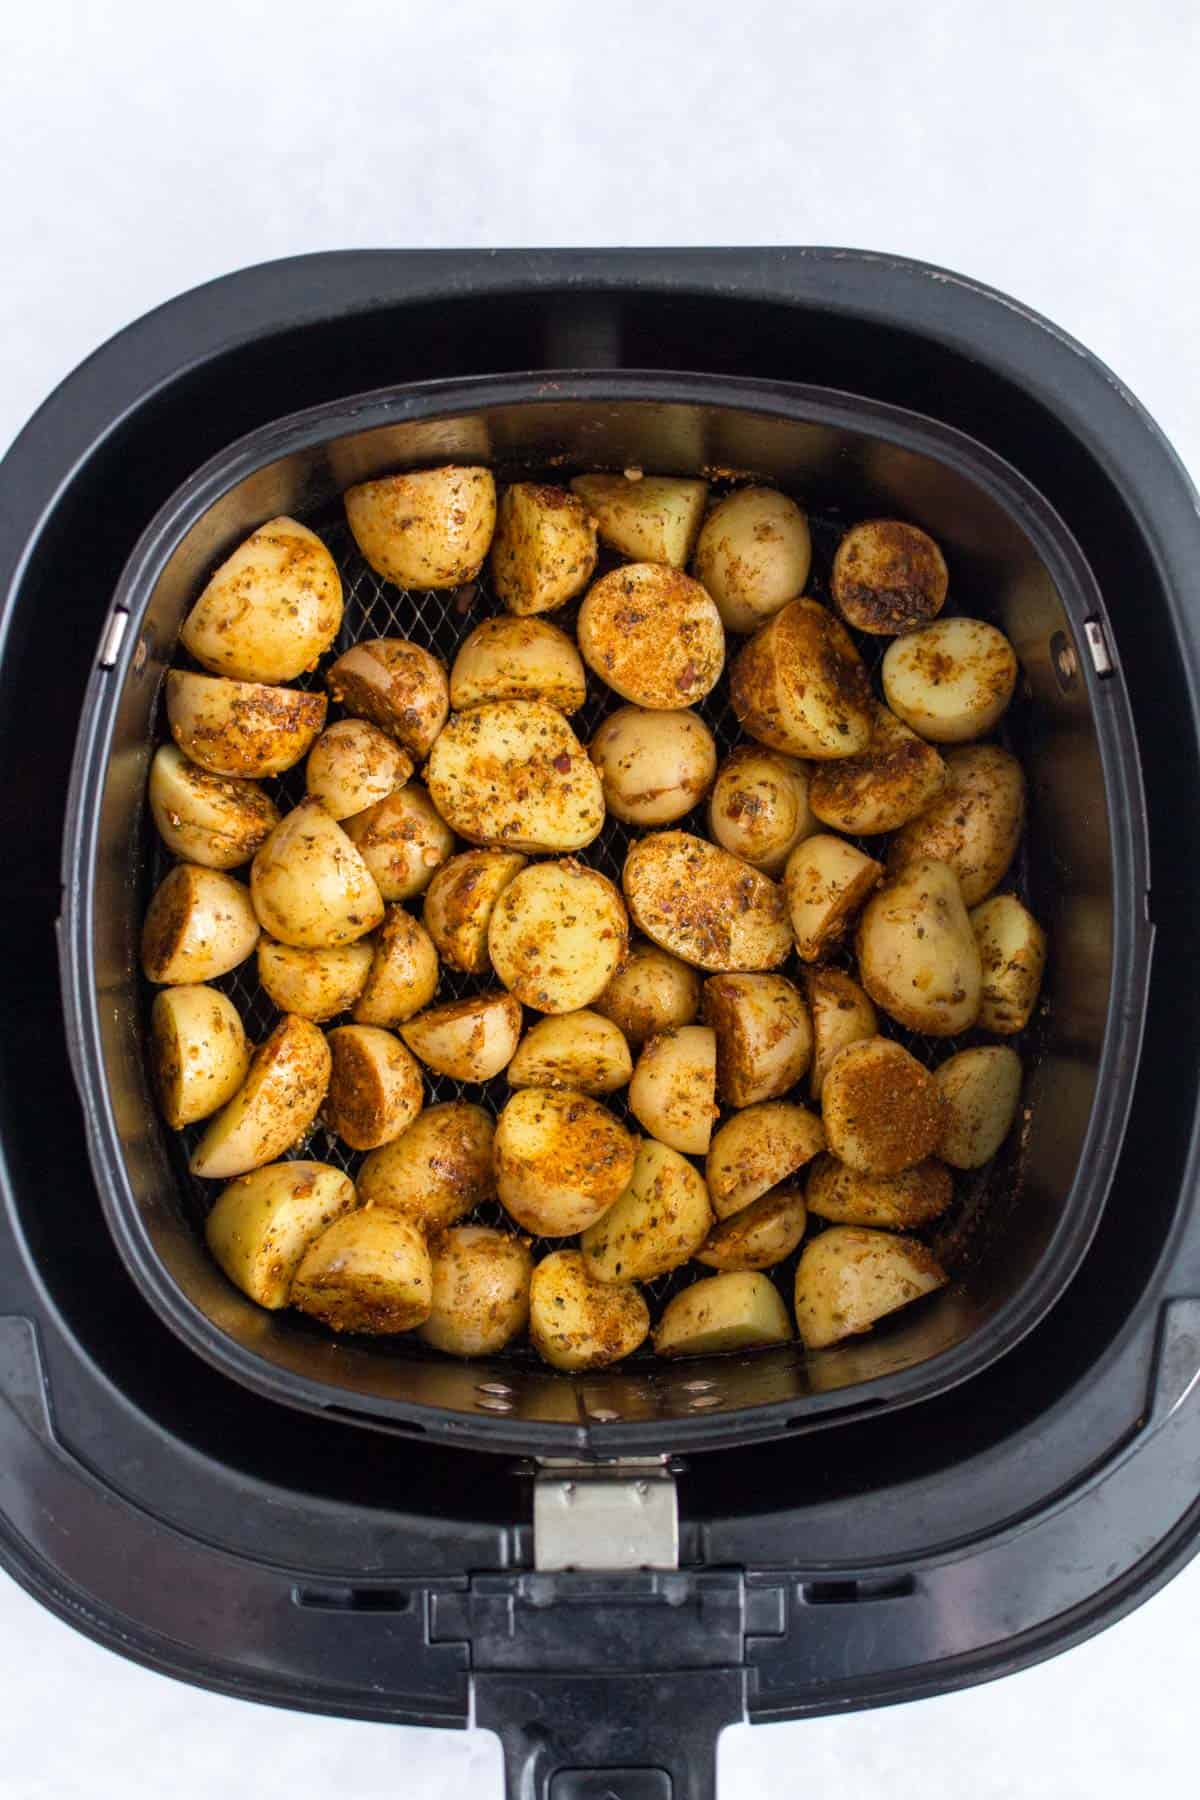 Baby potatoes in an air fryer before roasting.